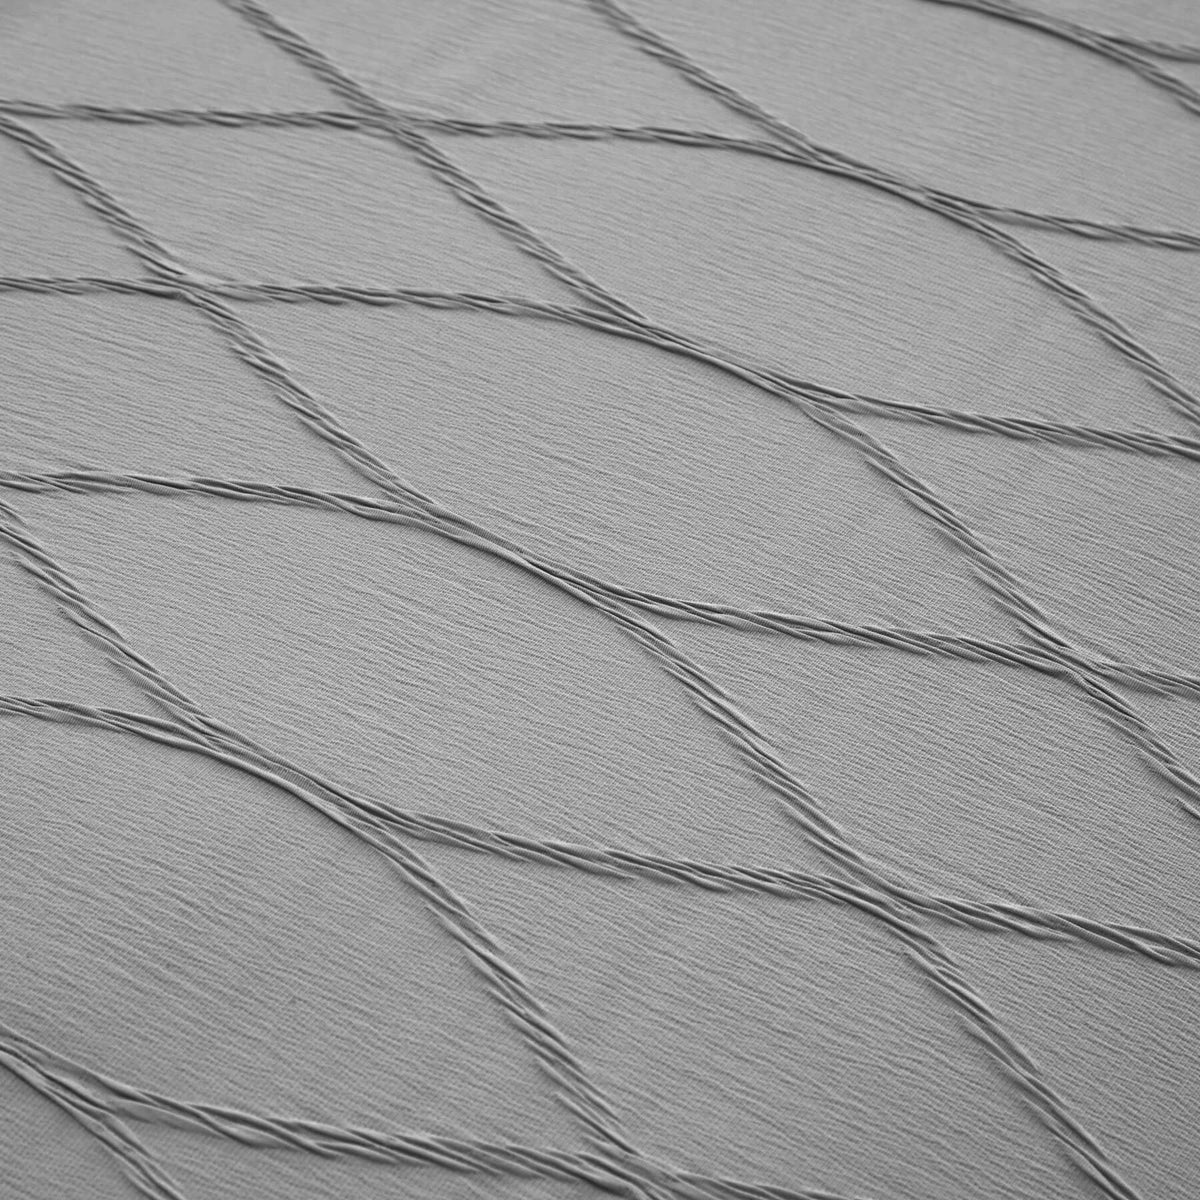 Chic Home Ophelia 9 Piece Textured Jacquard Comforter Set - Grey